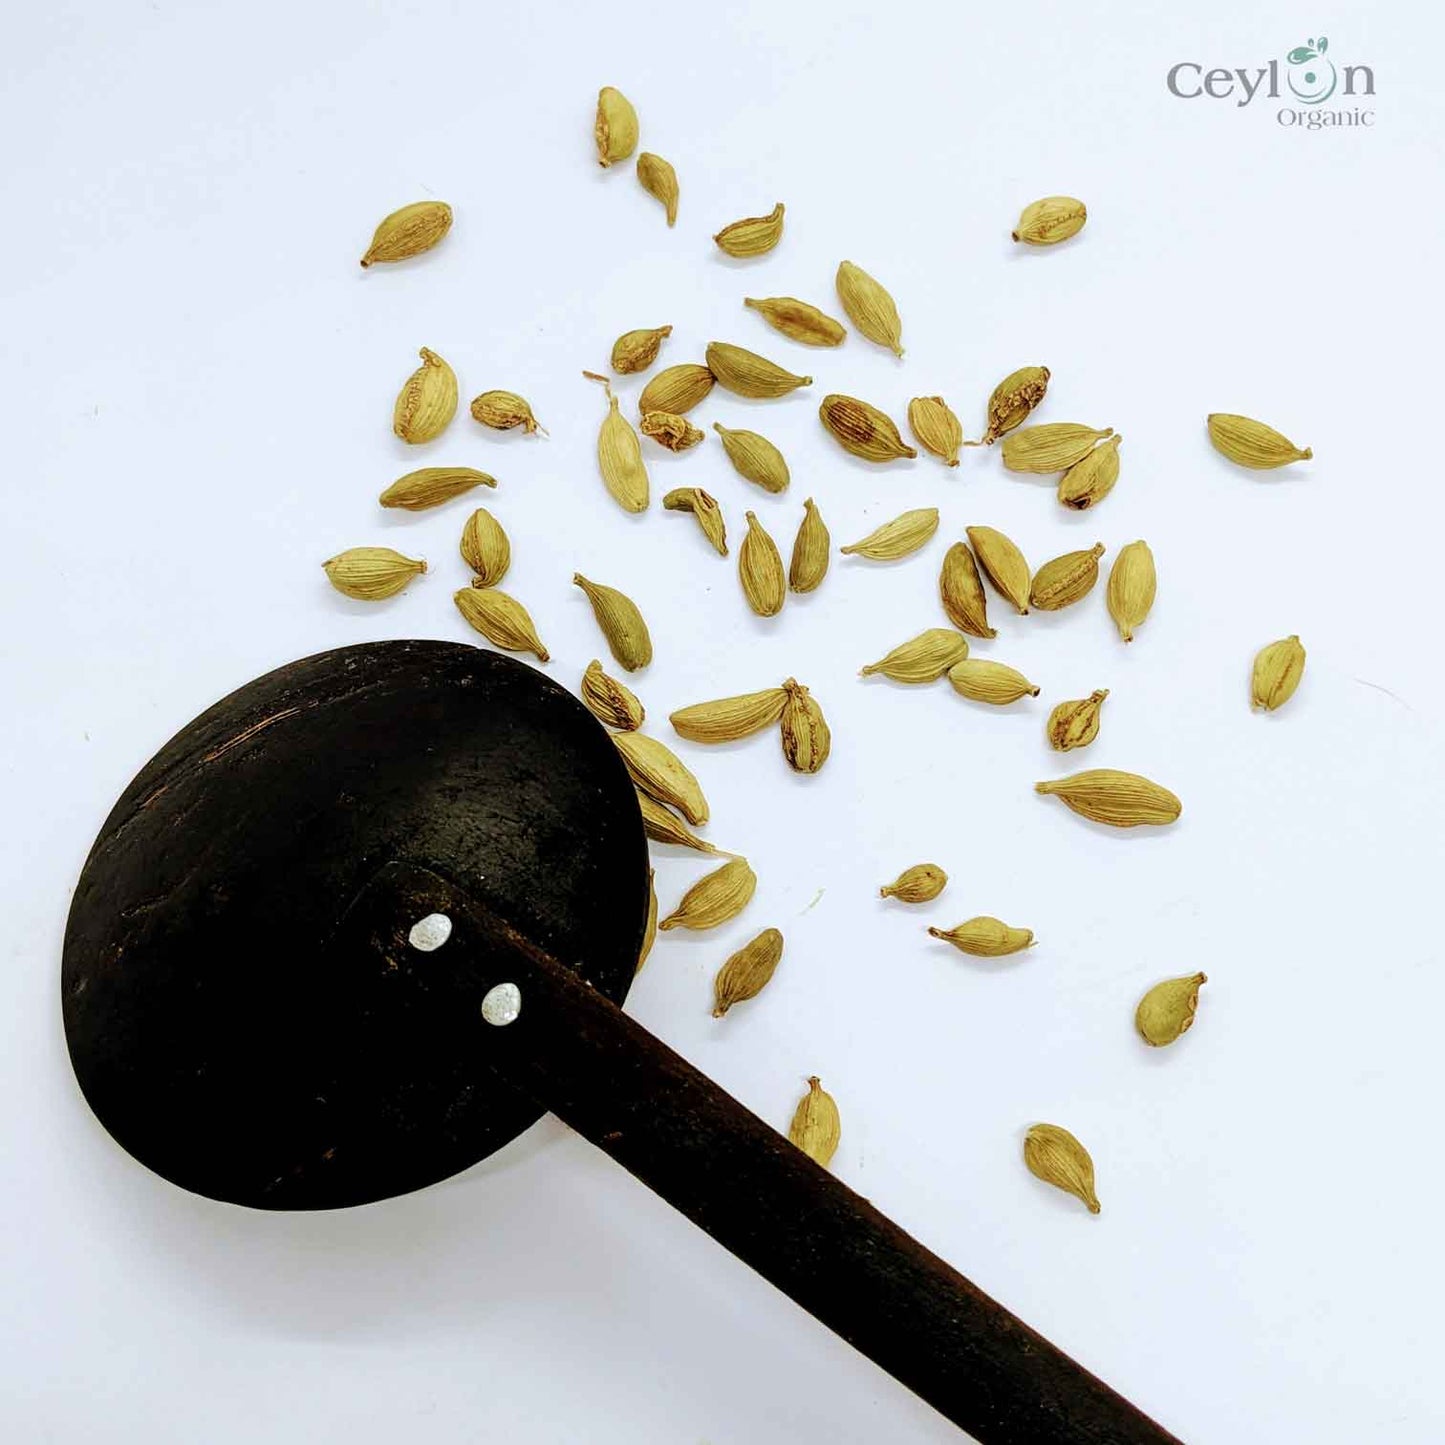 2kg+ Organic Cardamom, Cardamon, Cardamum, Best Quality Ceylon Spices | Ceylon Organic-1